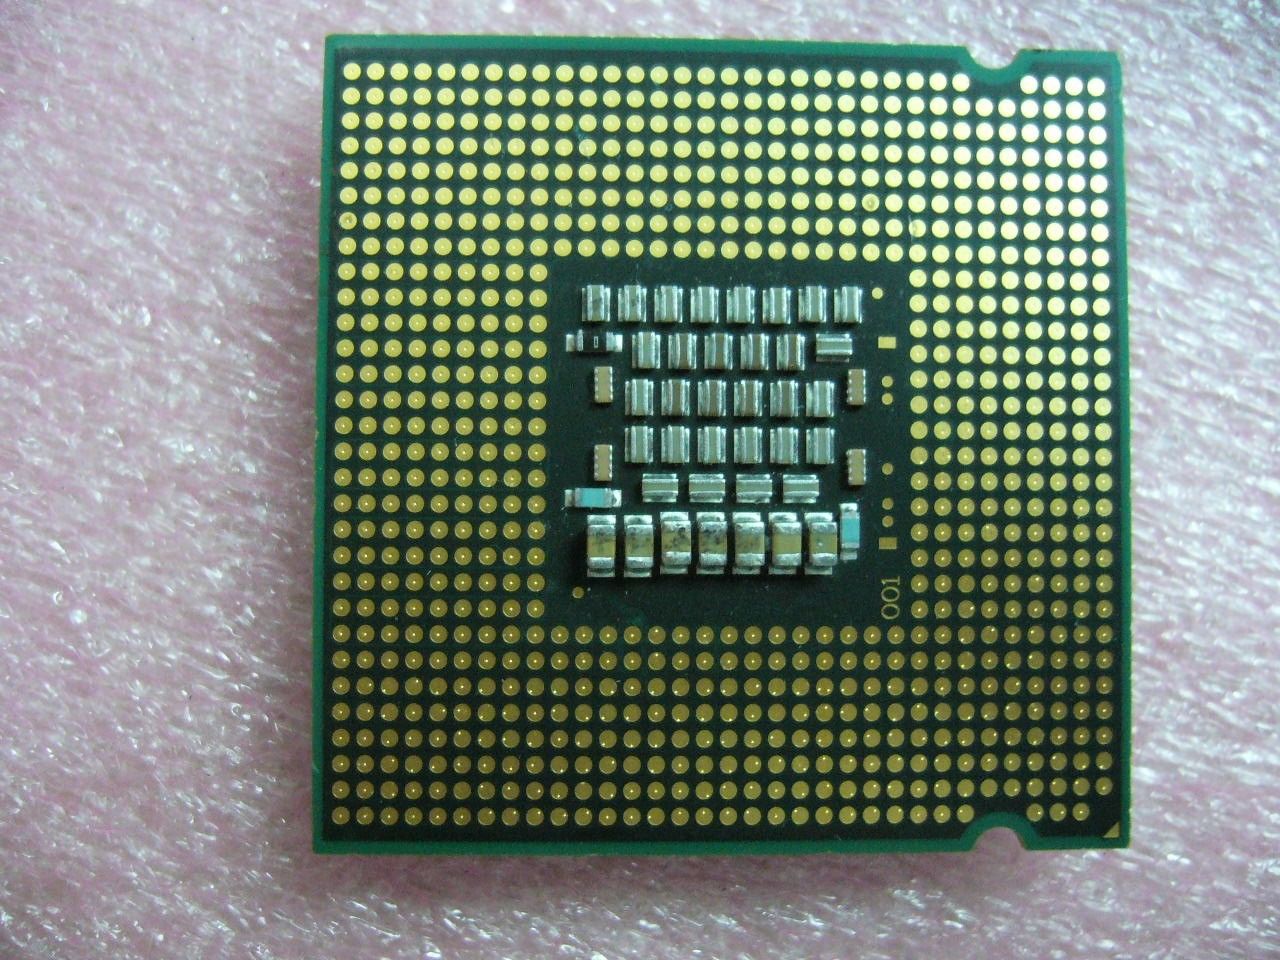 INTEL Dual Cores Xeon 3075 CPU 2.66GHz 4MB/1333Mhz LGA775 SLAA3 - Click Image to Close